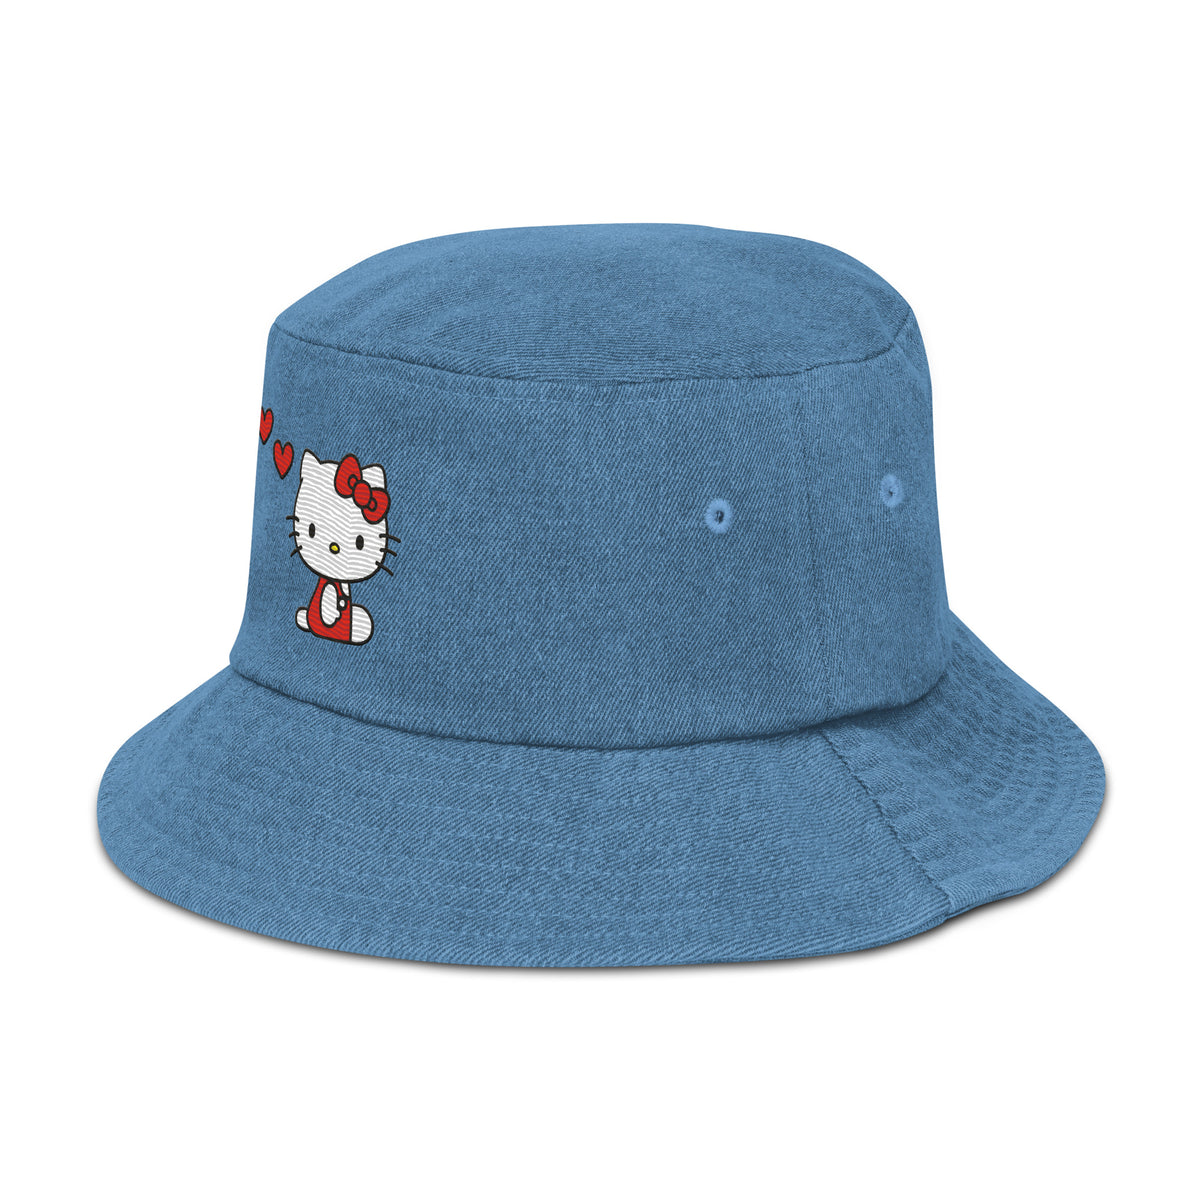 Hello Kitty Embroidered Denim Bucket Hat Apparel Printful   